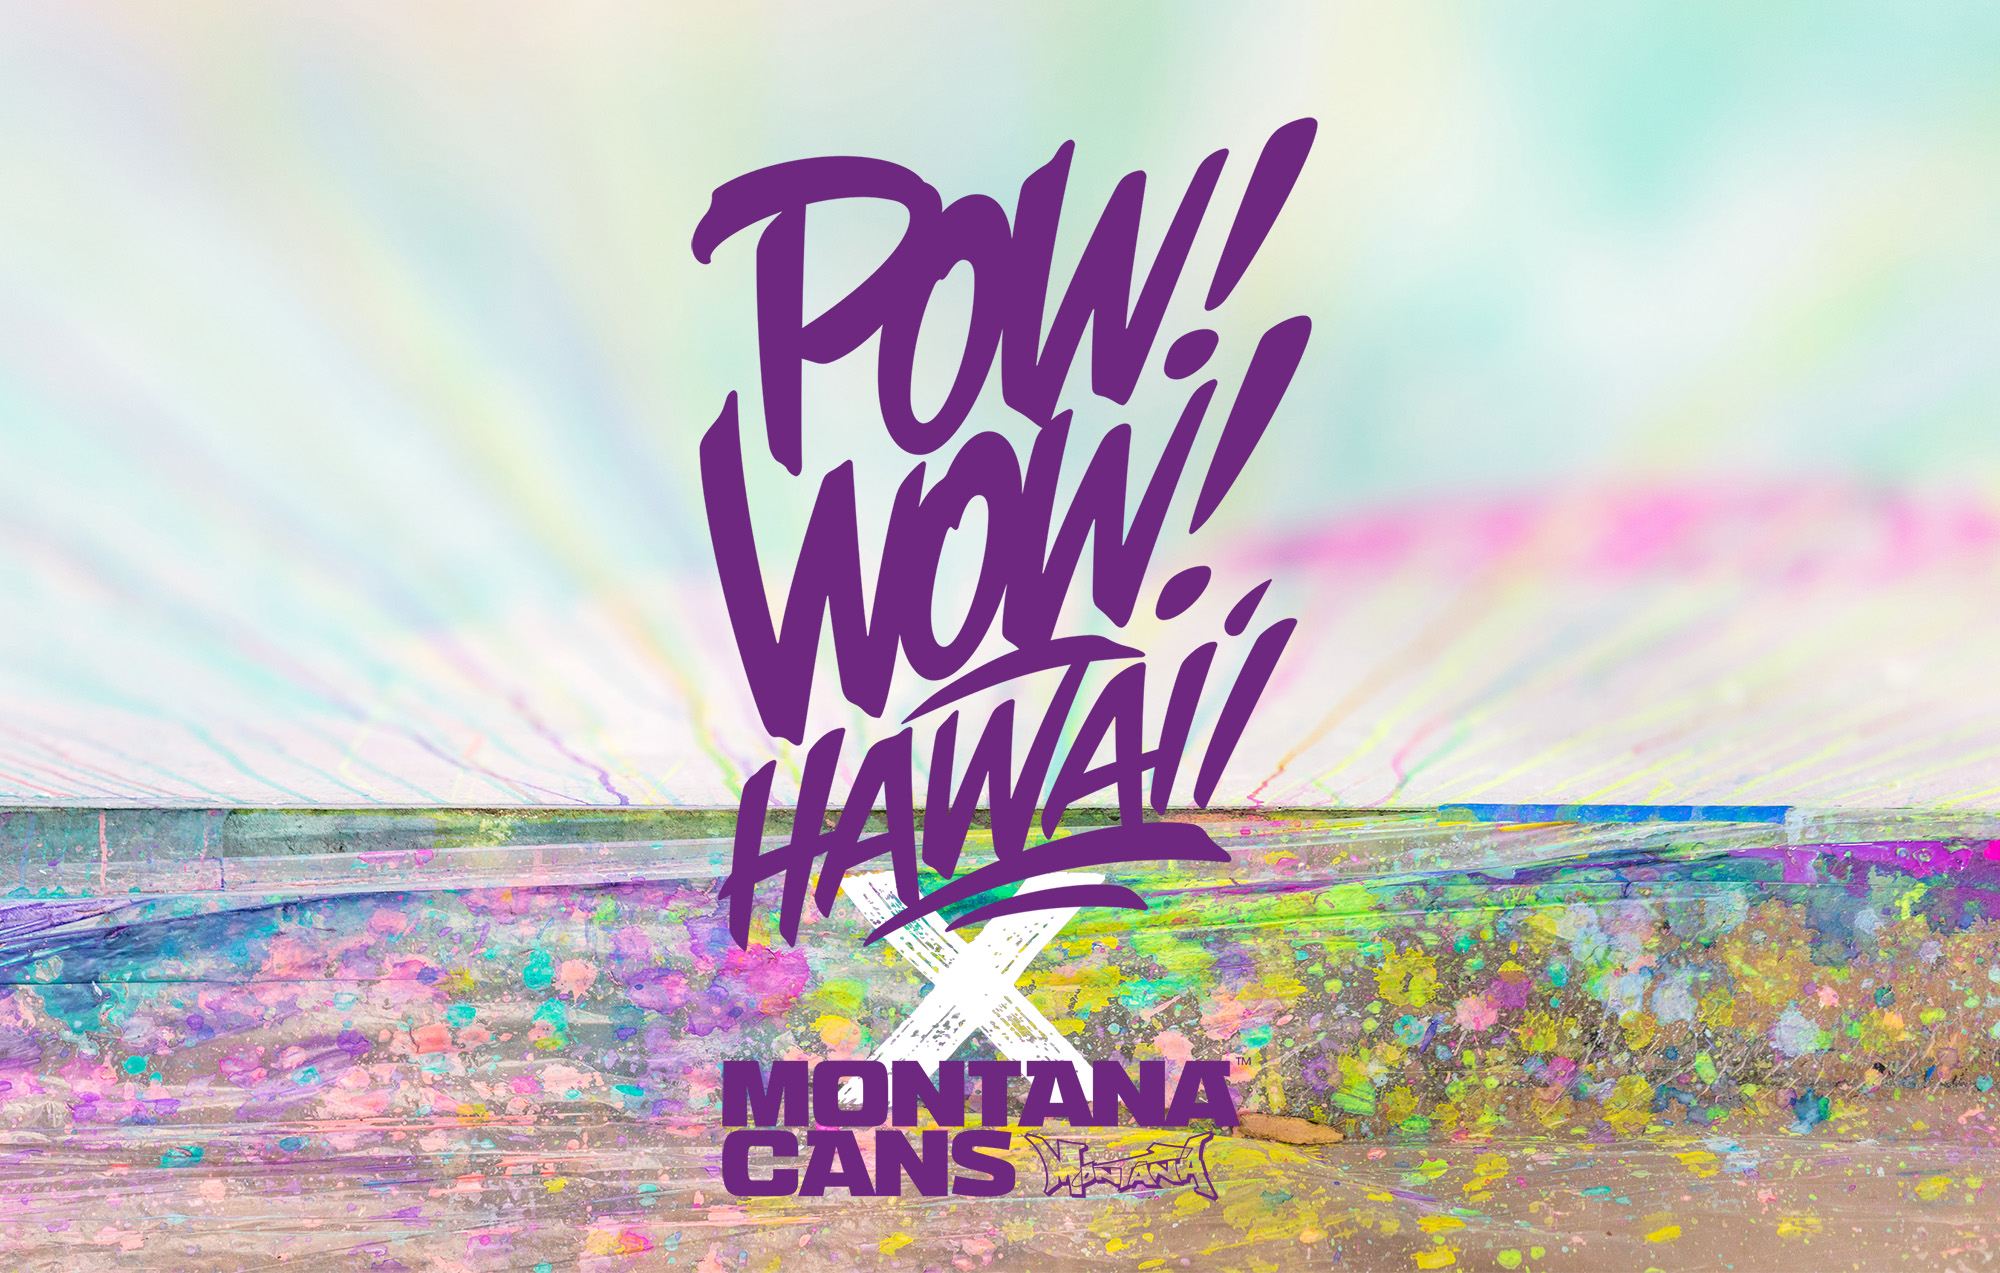 Montana Cans X POW! WOW! Hawaii